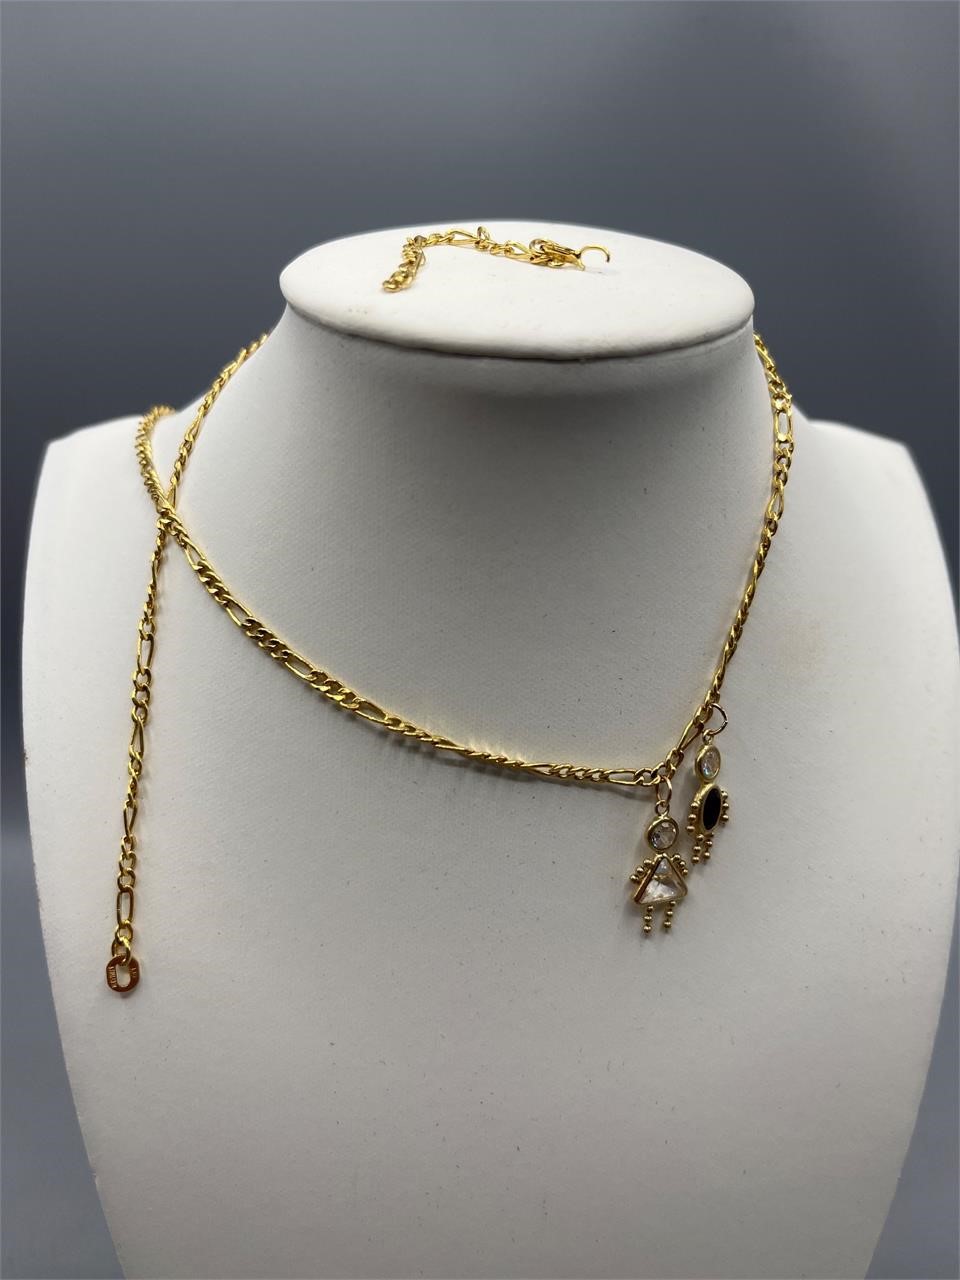 14k gold necklace & charms (damaged)